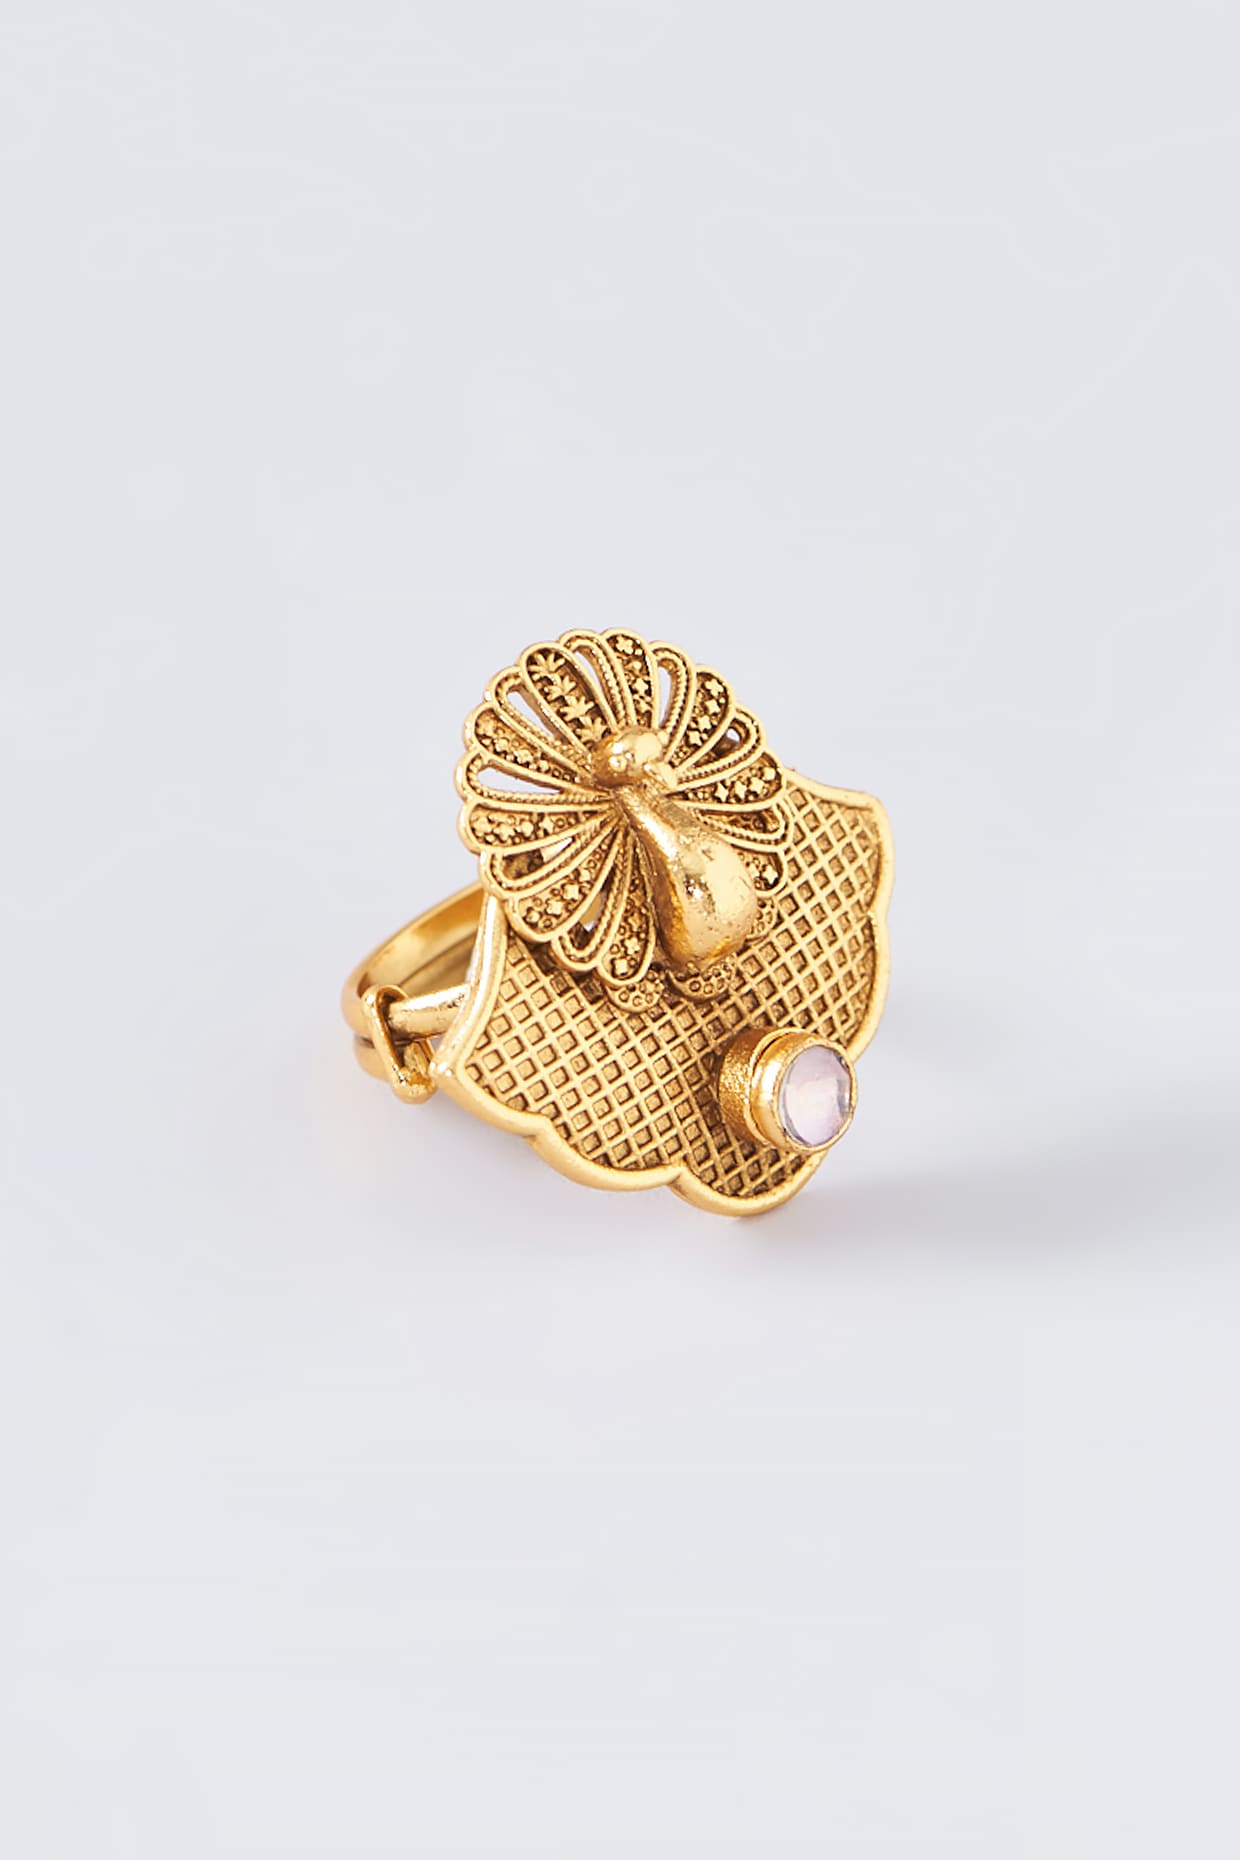 Sukkhi Junoesque Gold Plated Kundan Golden Ring for Women - Sukkhi.com